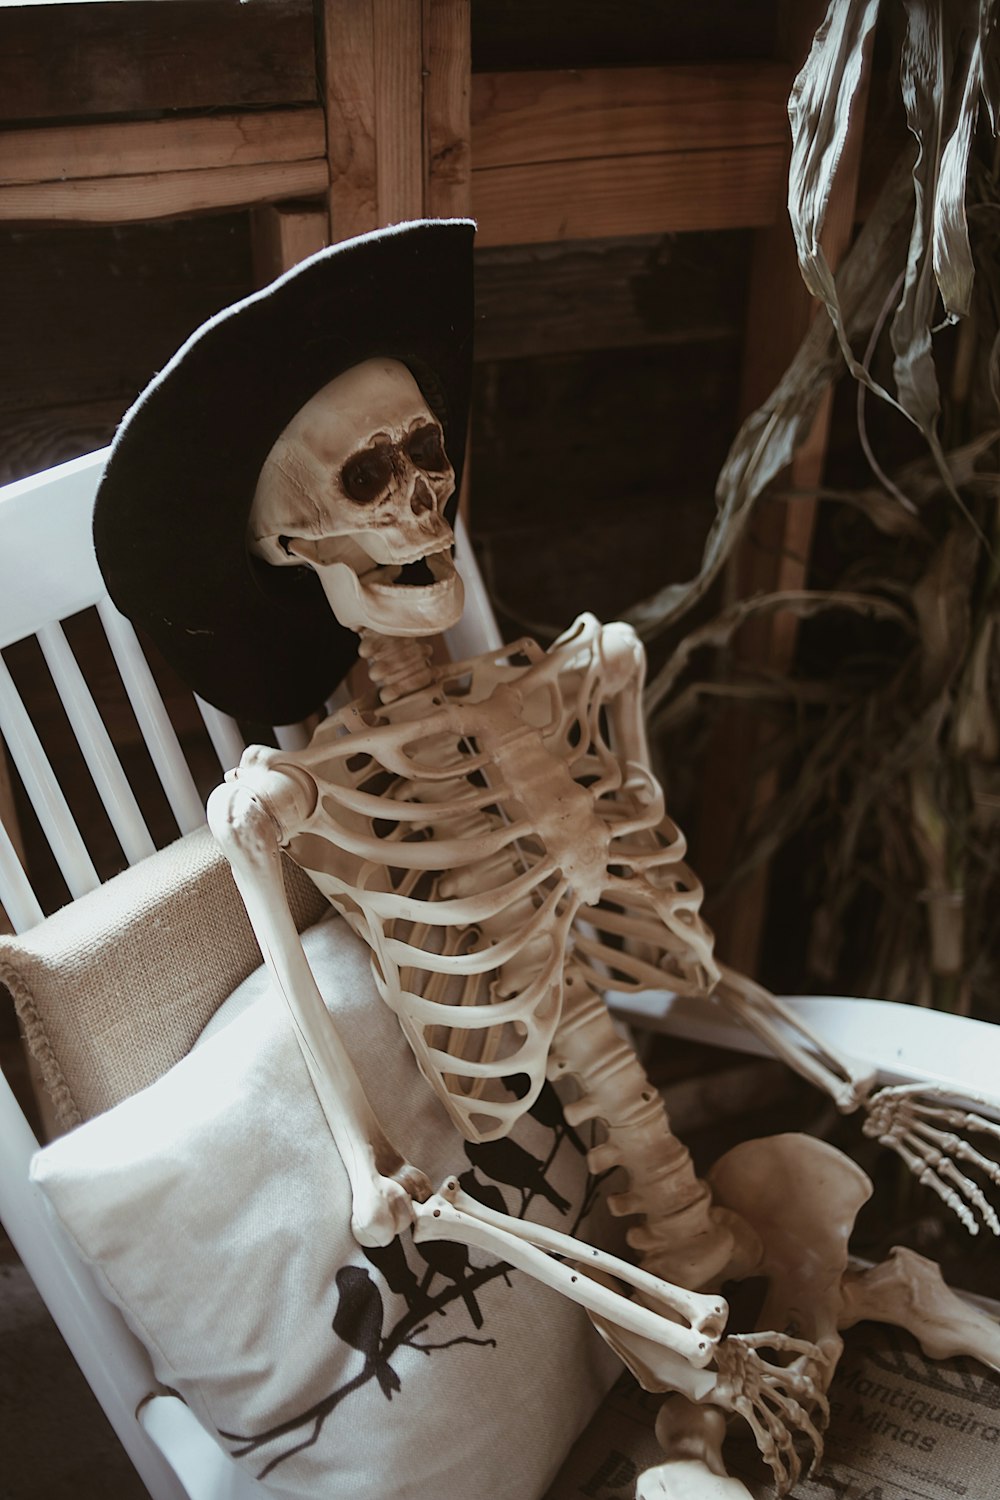 uno scheletro seduto su una sedia con un cappello